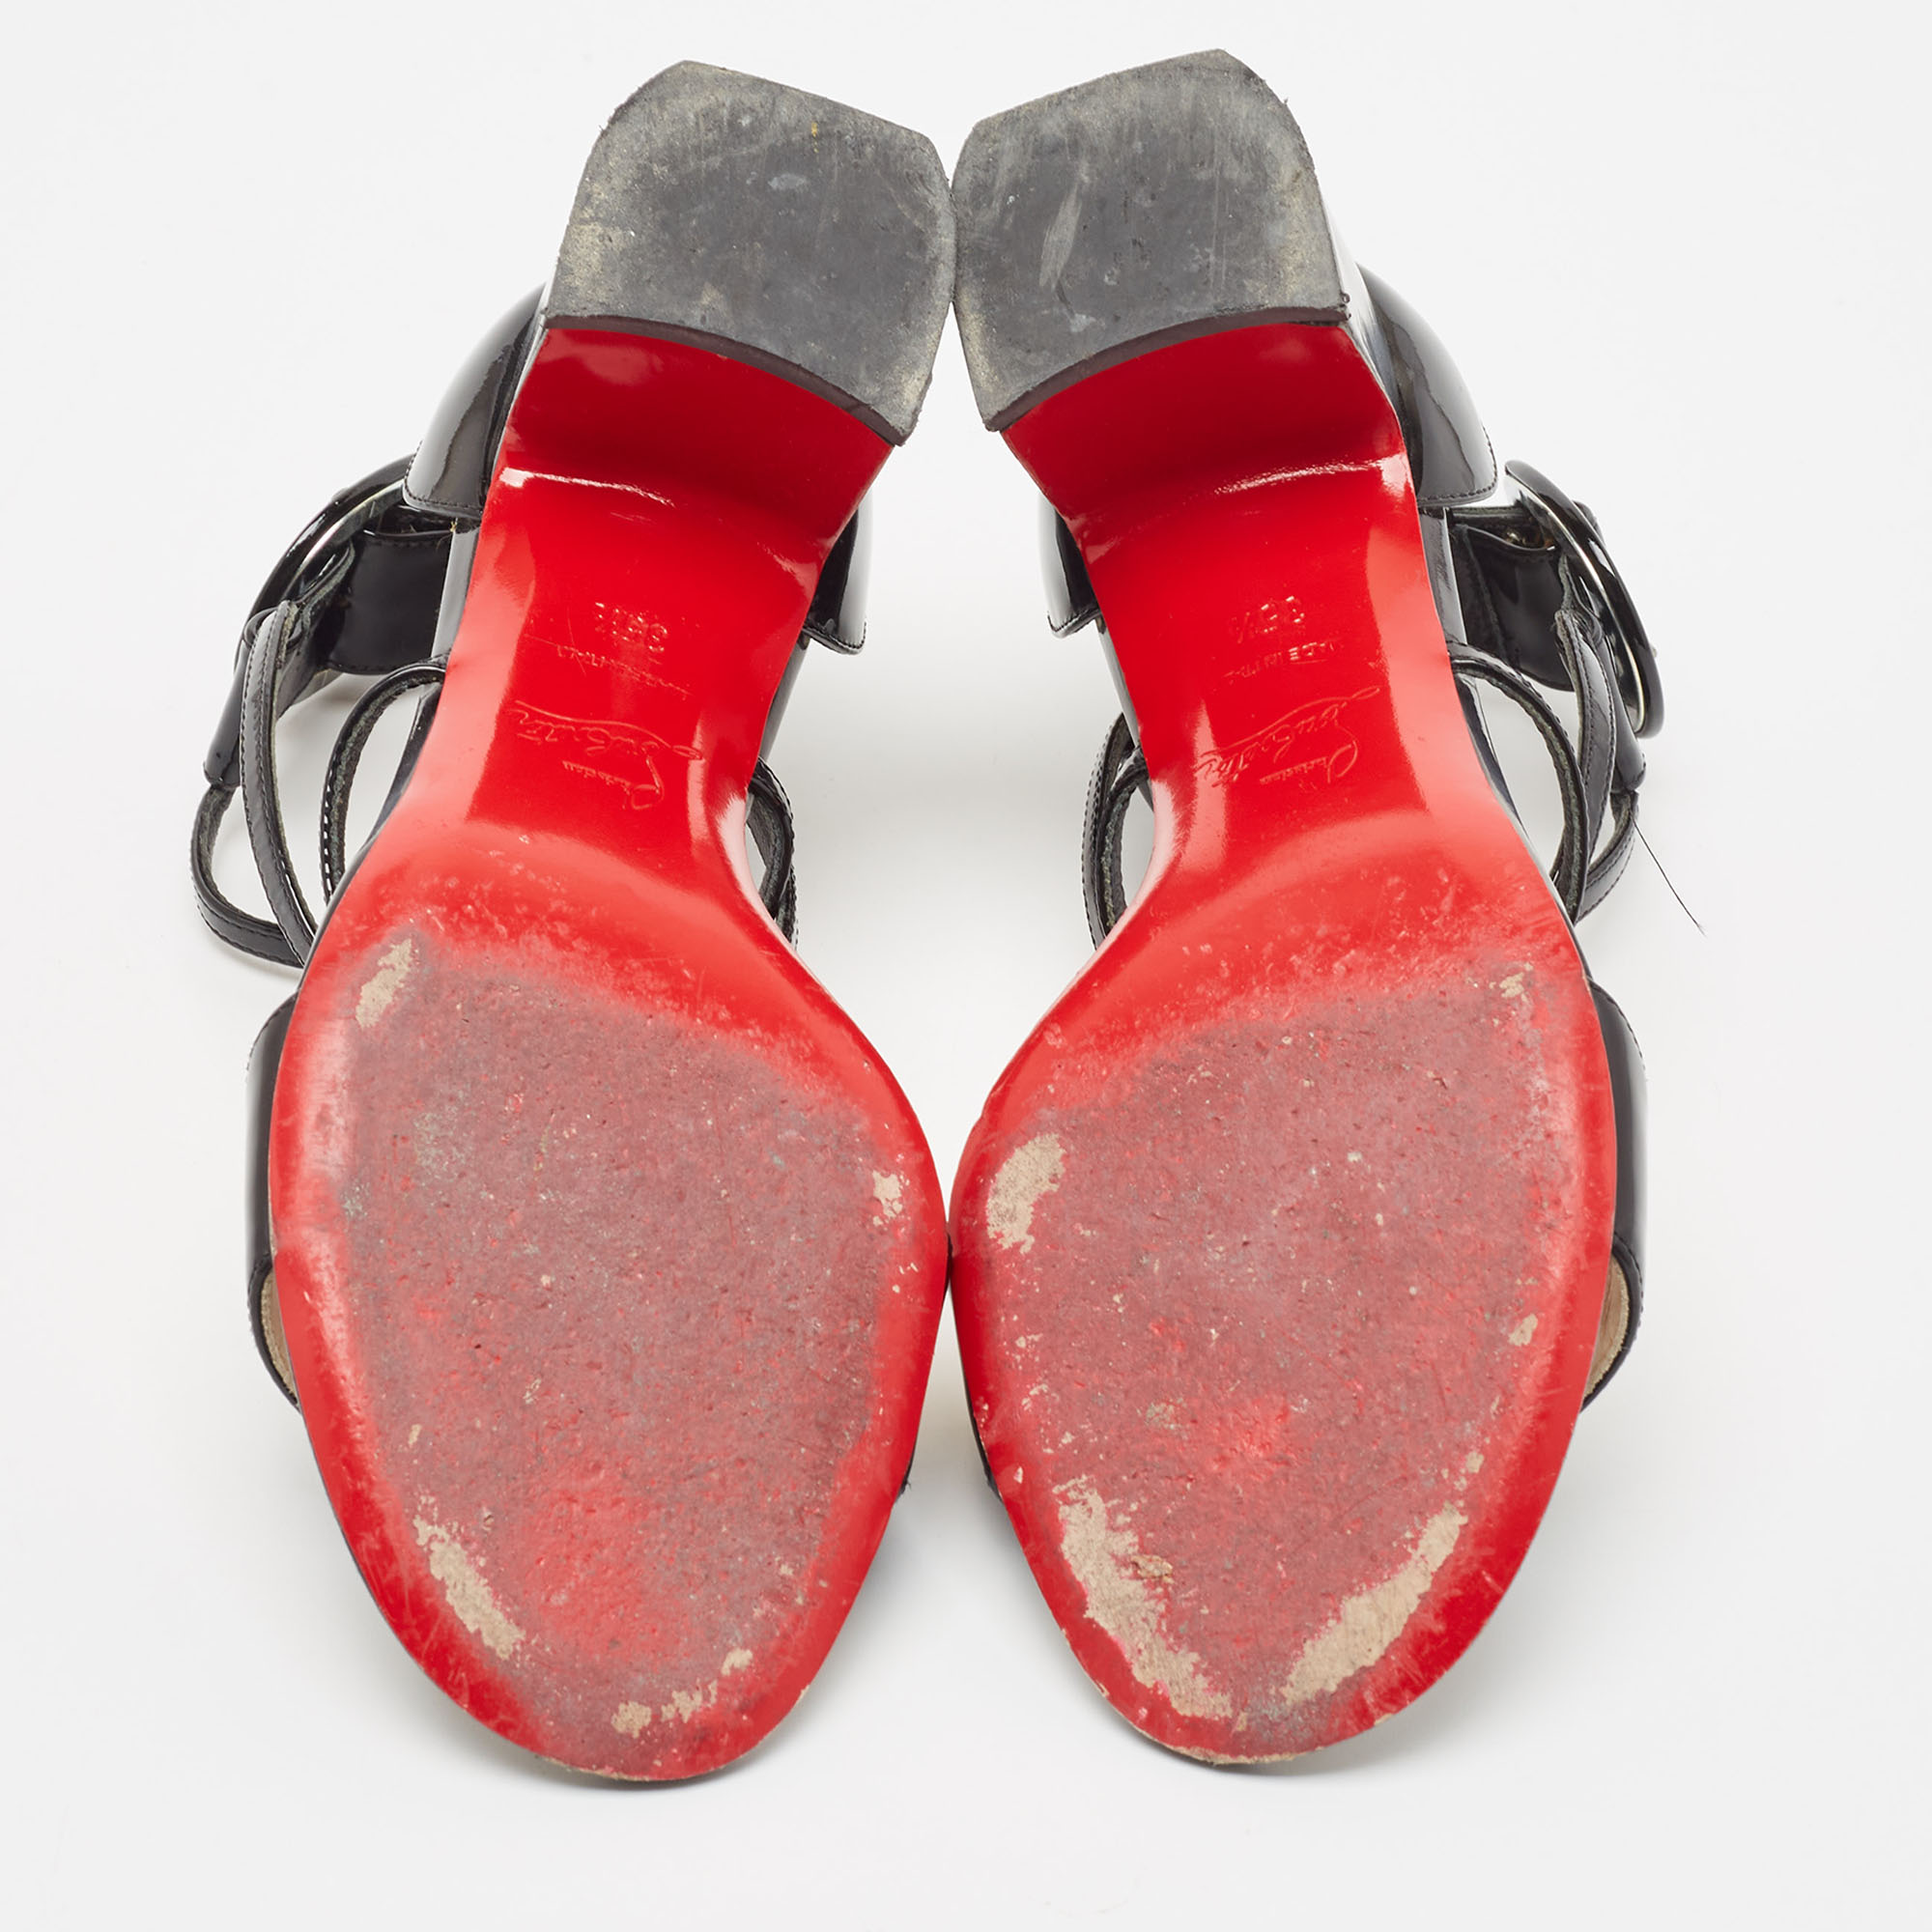 Christian Louboutin Black Patent Strappy Block Heel Sandals Size 35.5